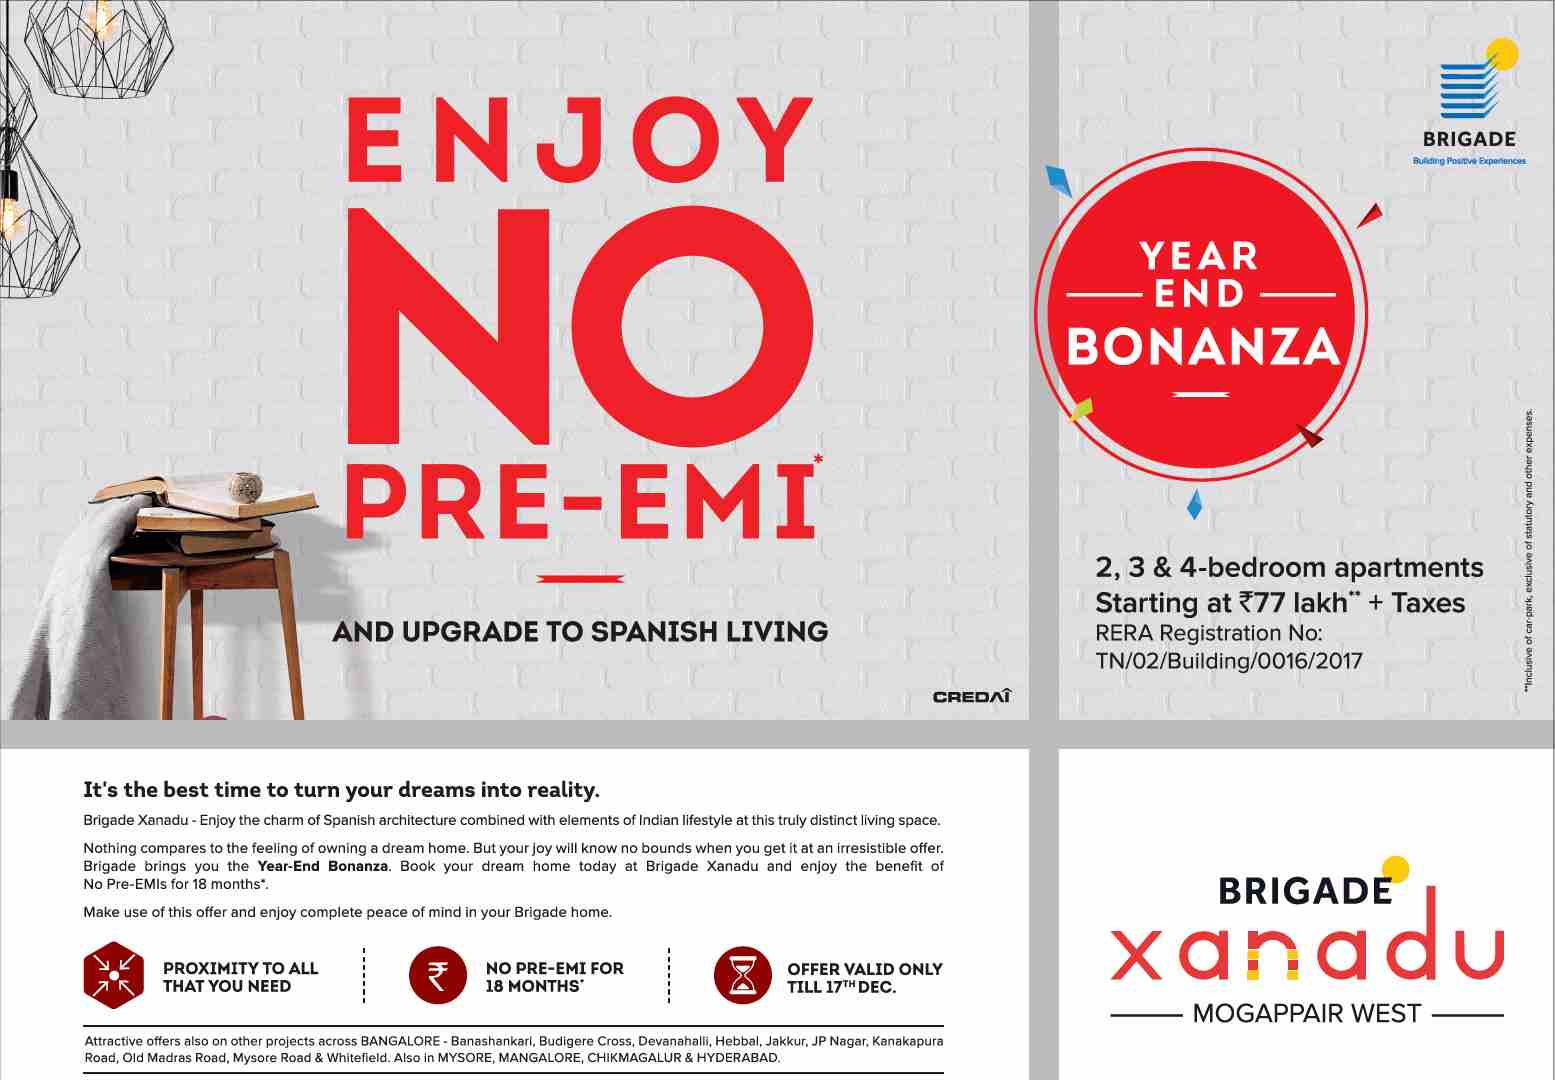 Enjoy no pre-EMI and upgrade to Spanish living during Year End Bonanza offer at Brigade Xanadu in Chennai Update